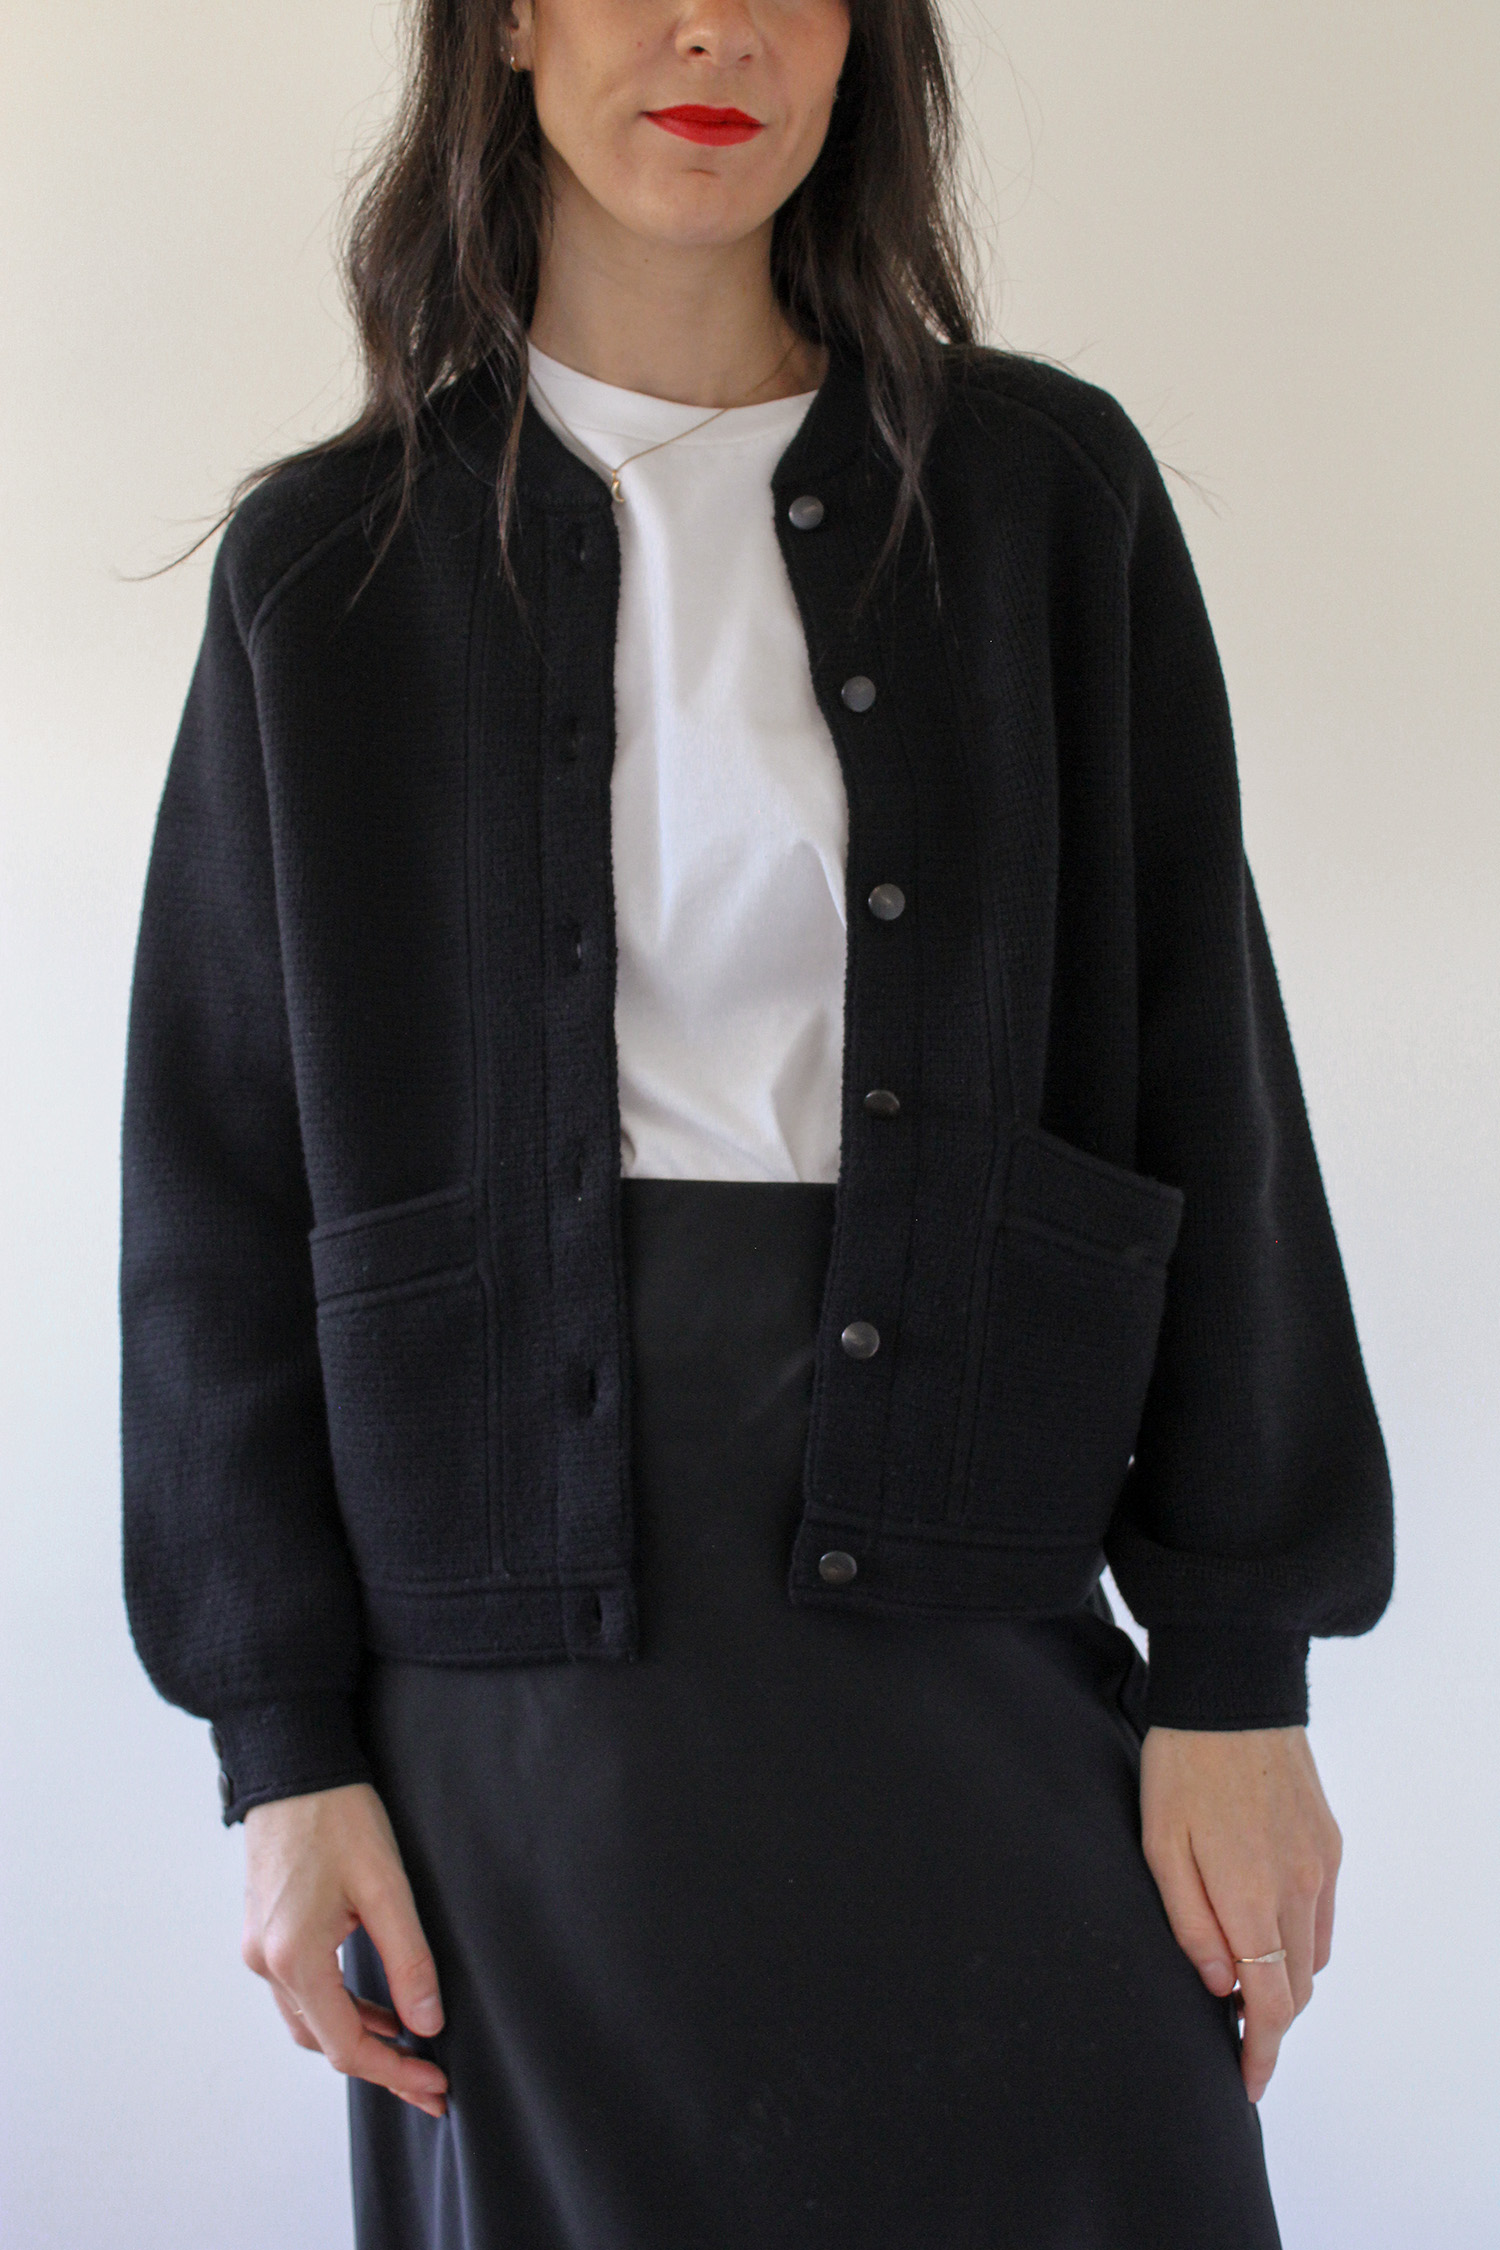 Noe Jacket in Black Merino Wool and Cotton